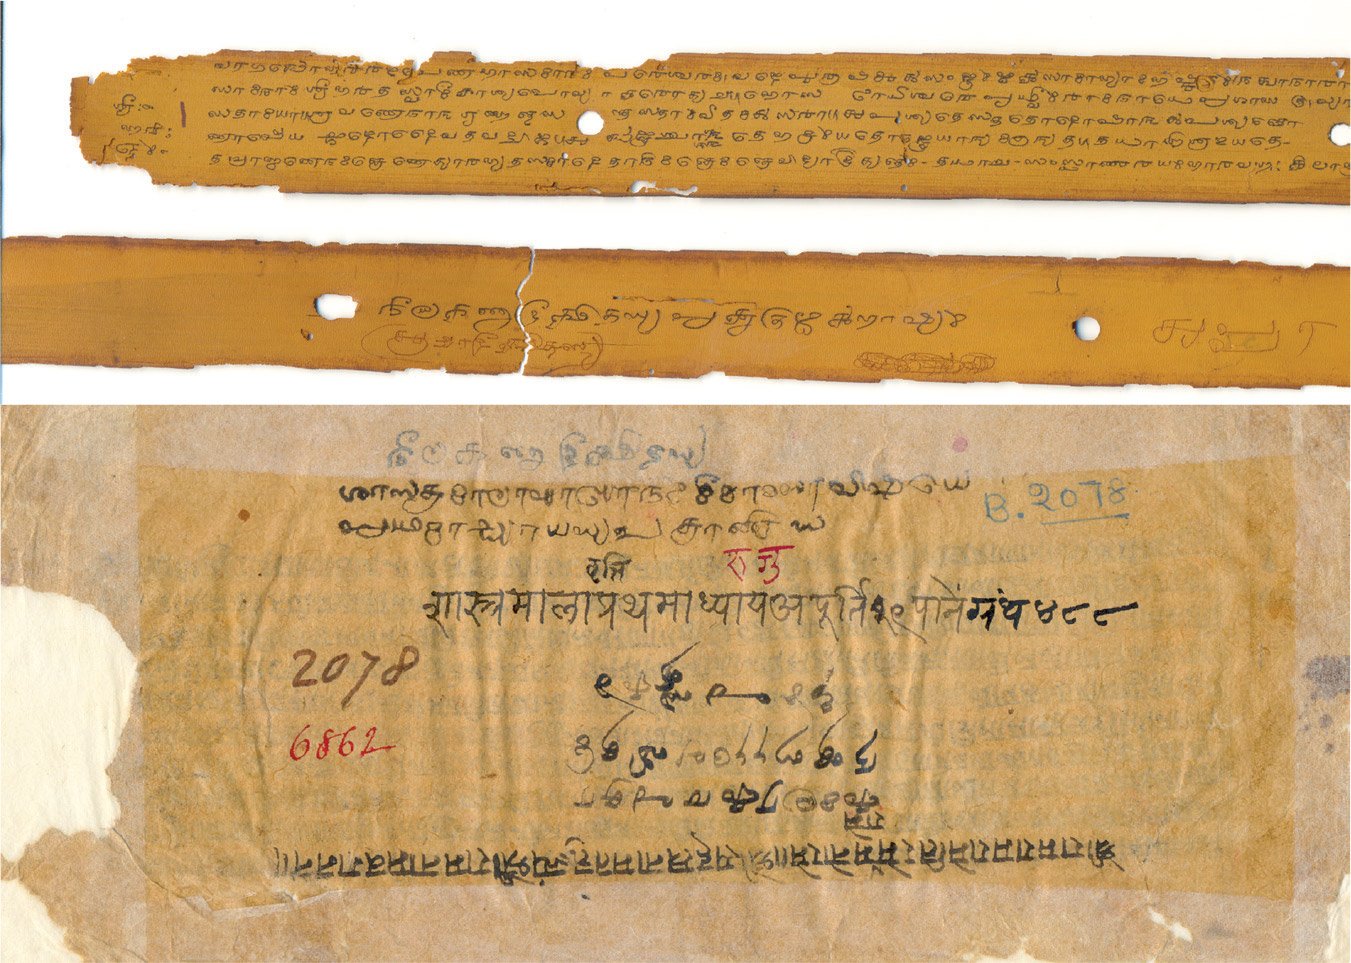 Mansuscript with signature of Nilakantha Dikshita